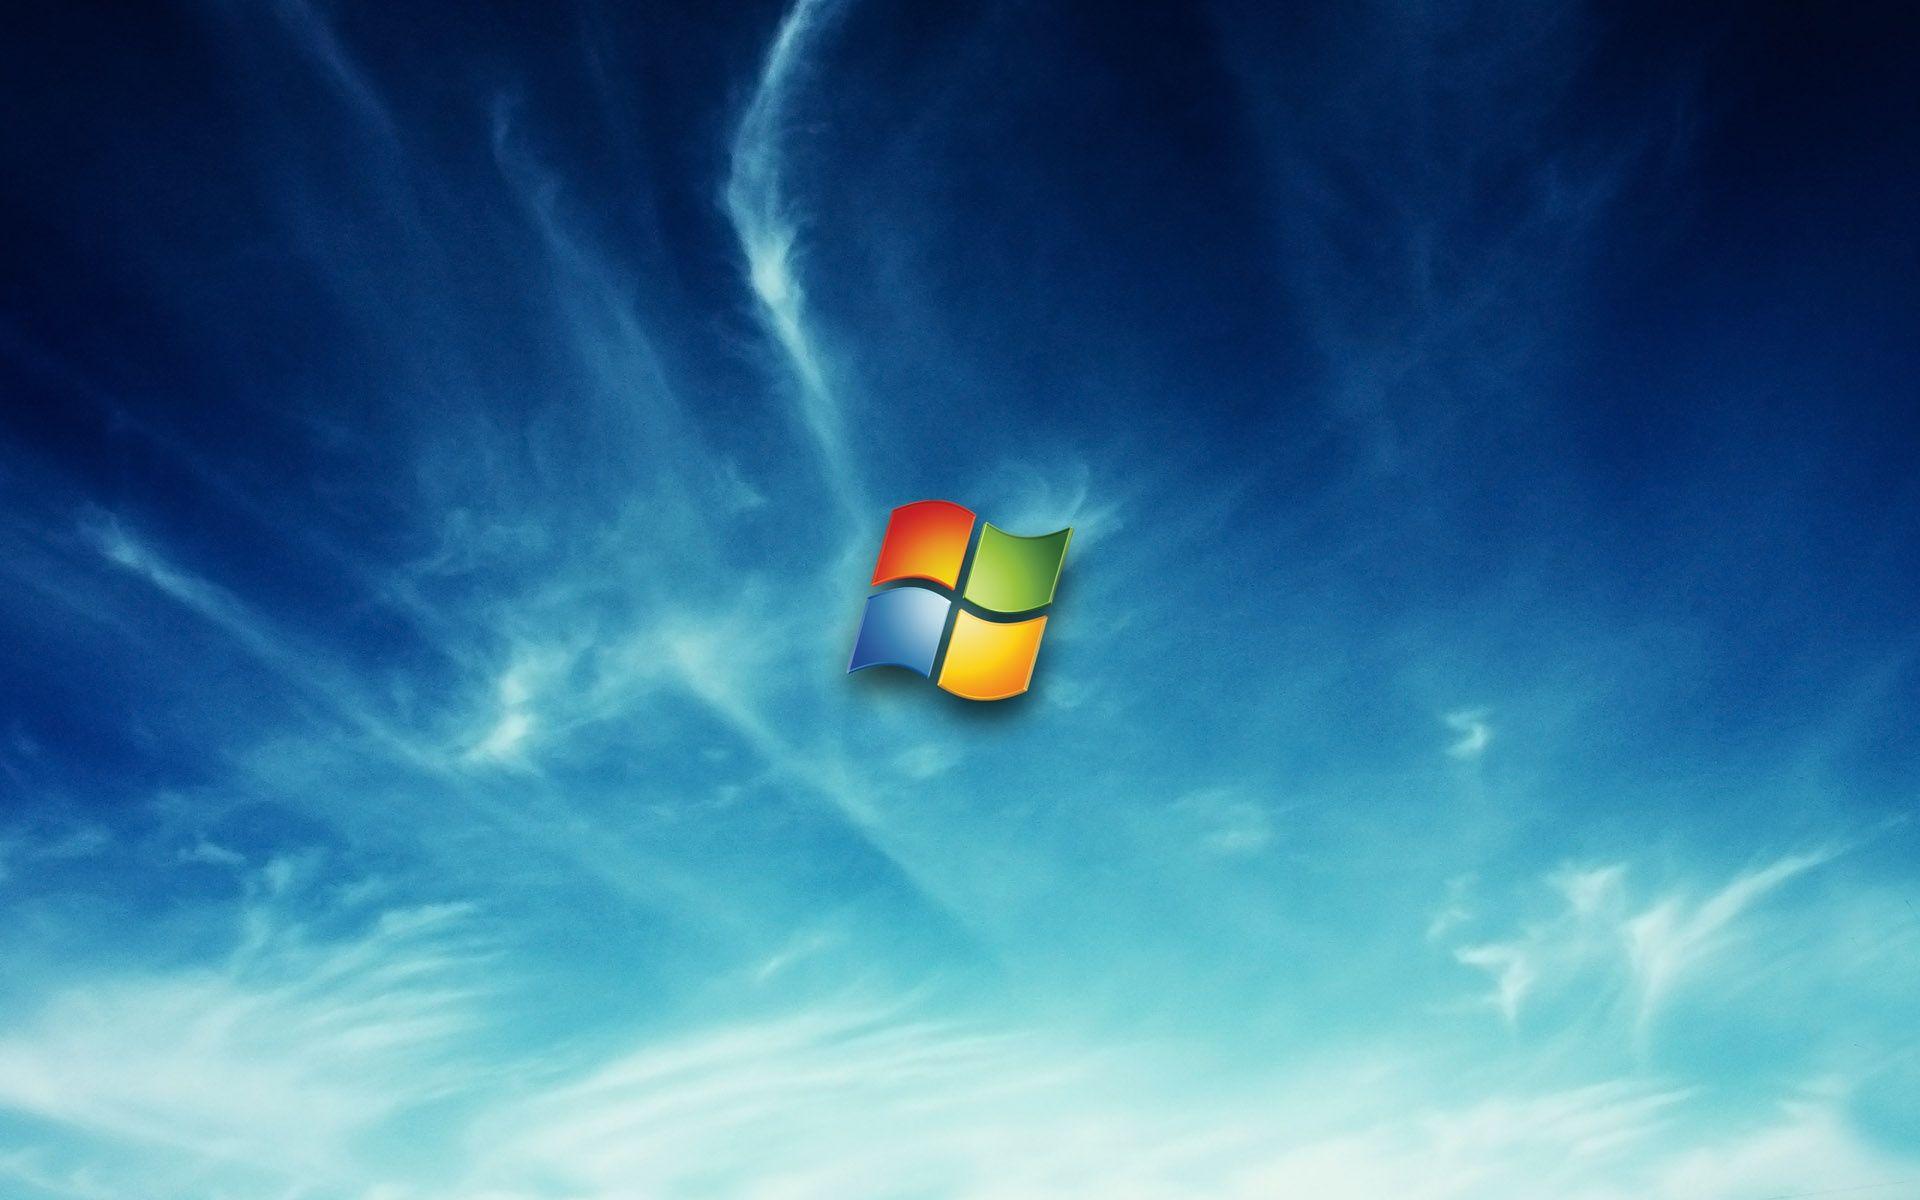 image For > Microsoft Windows 7 Wallpaper HD